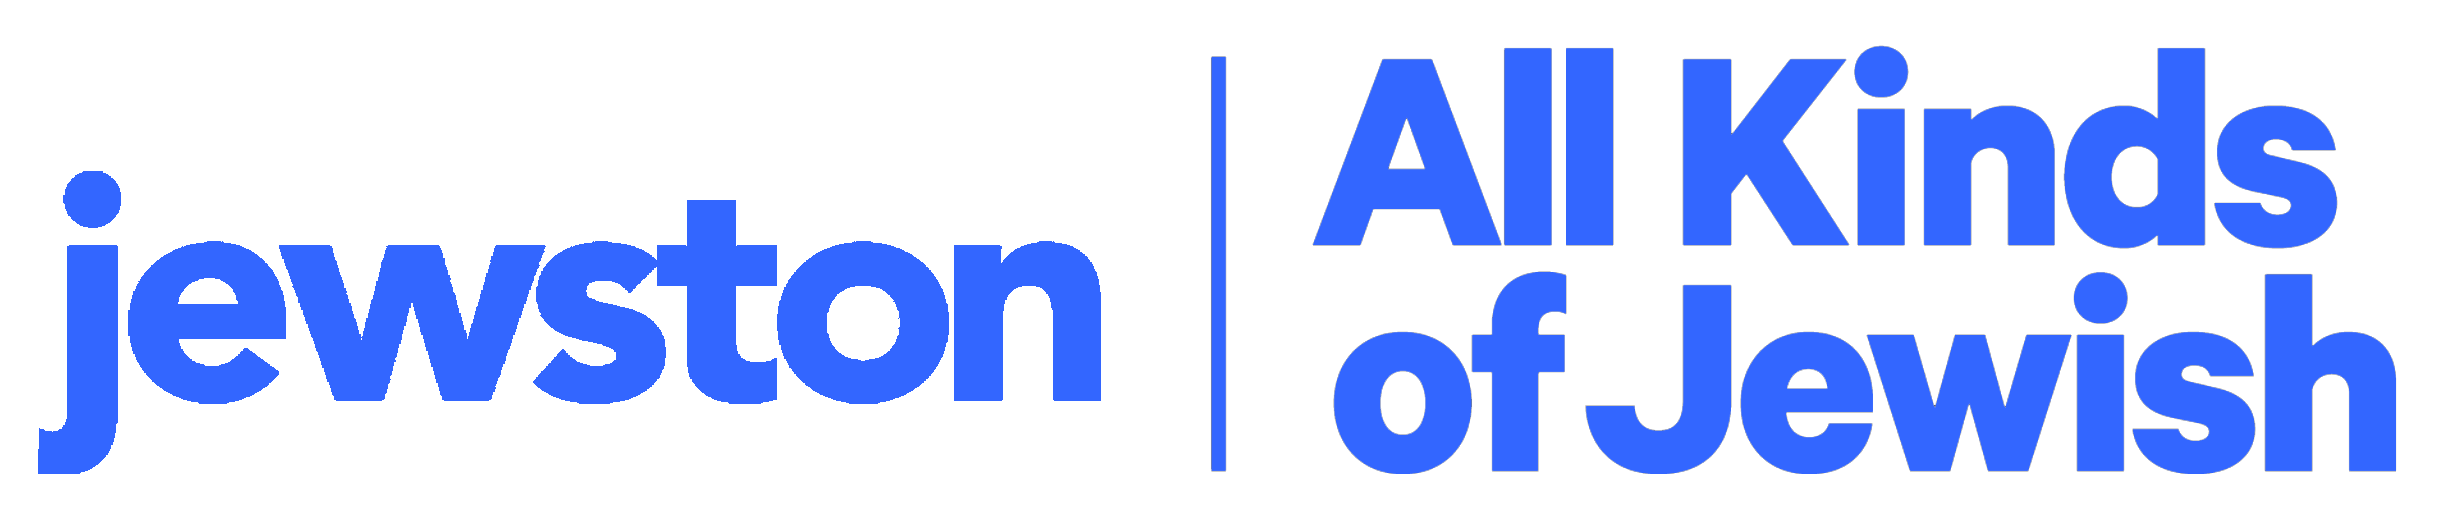 Houston Hillel logo